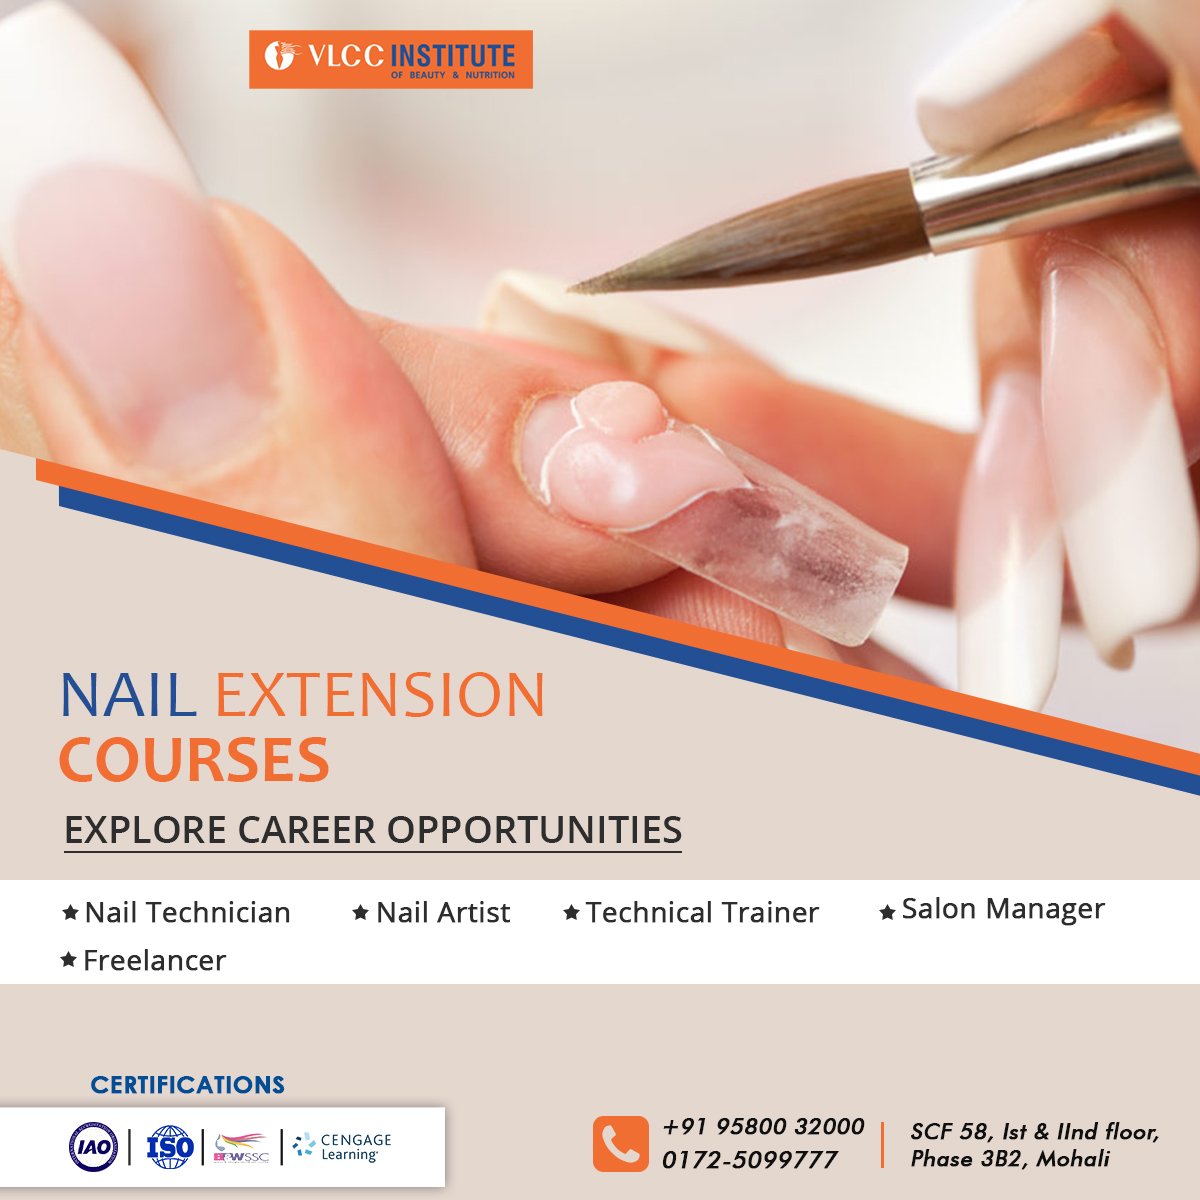 Top Nail Art Training Institutes in Thiruvananthapuram - Best Nail Art  Course - Justdial